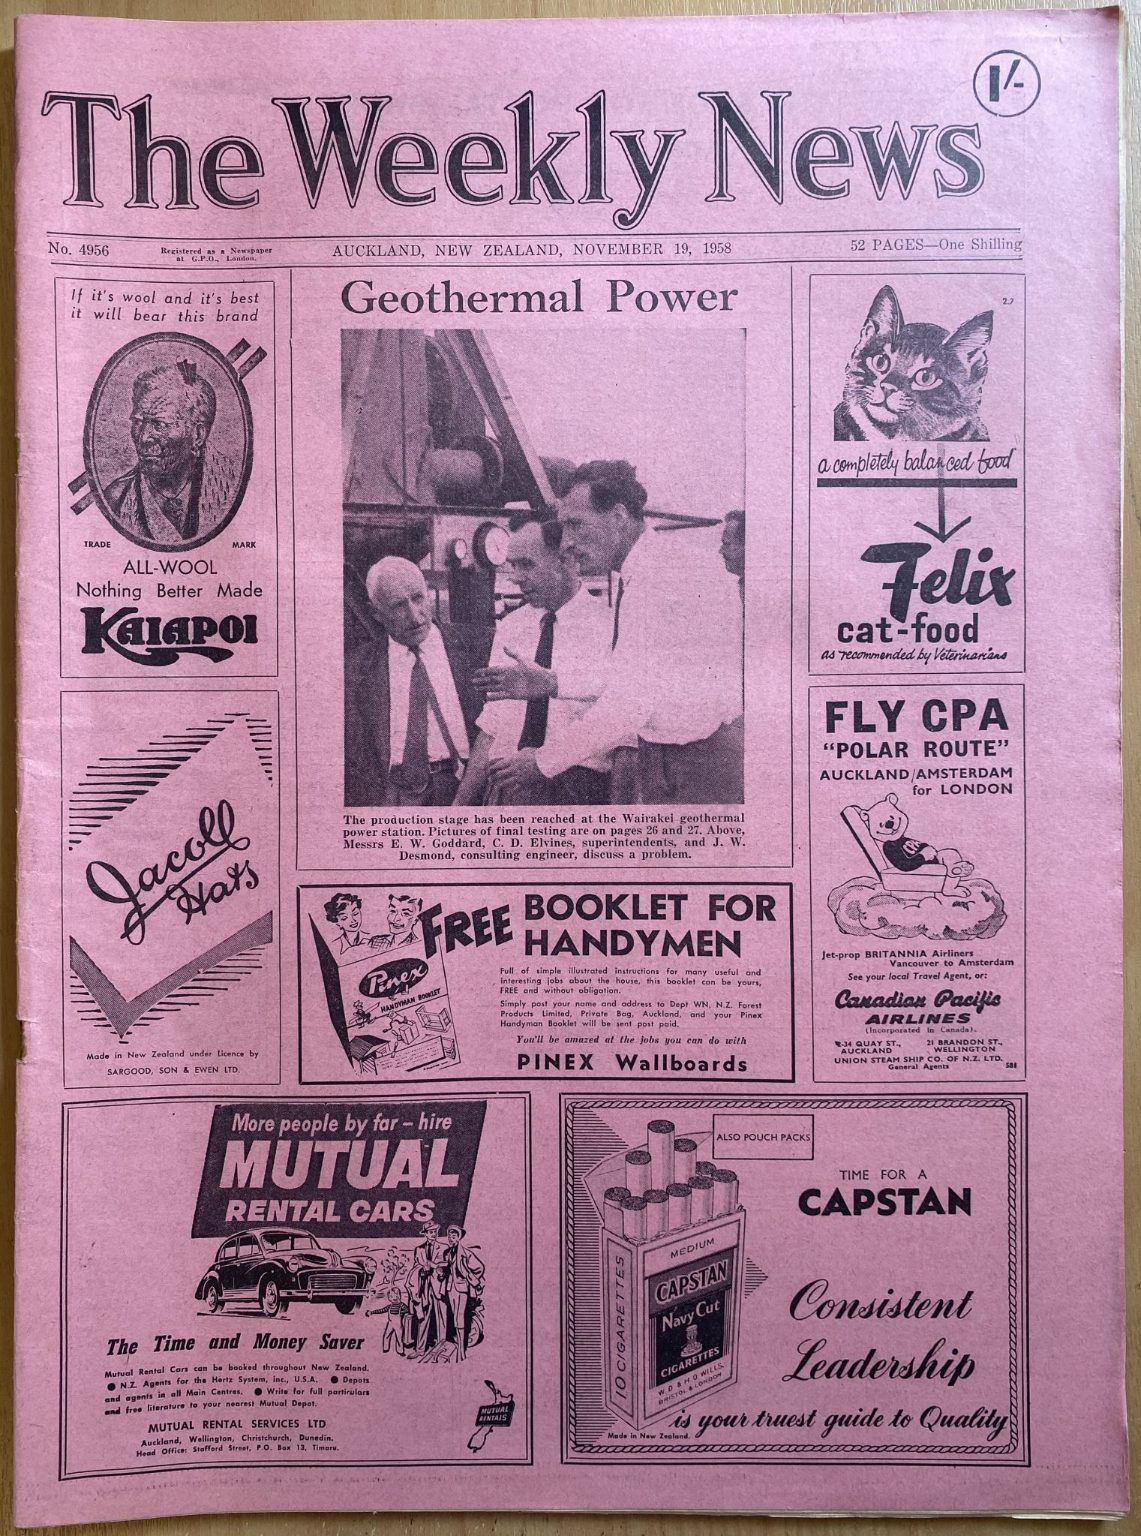 OLD NEWSPAPER: The Weekly News, No. 4956, 19 November 1958